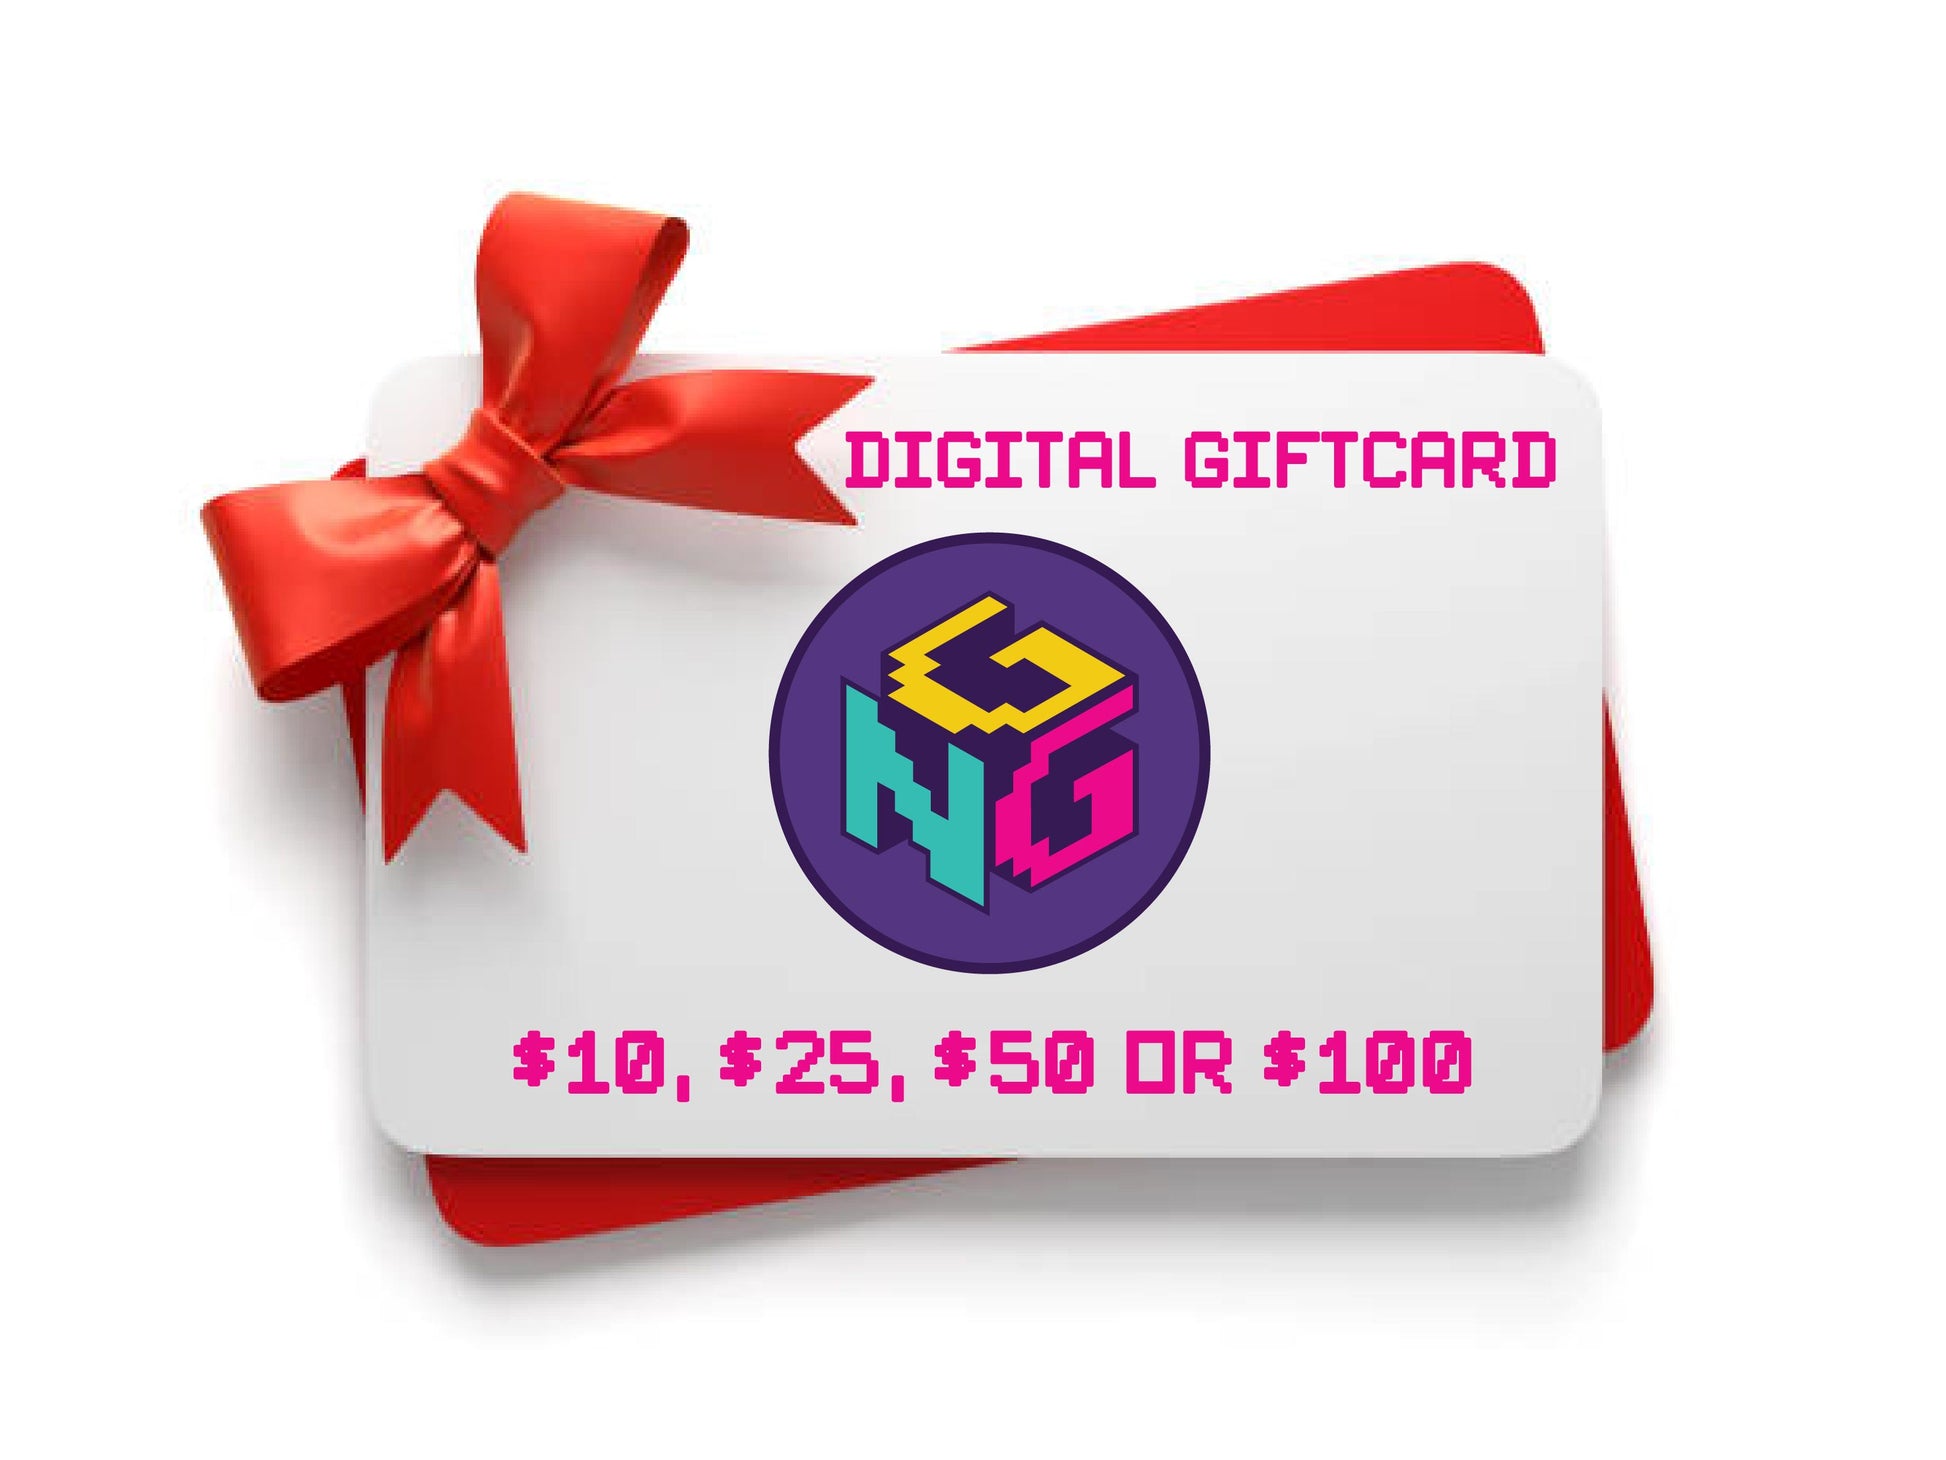 Gift Card Nintendo Switch 50 reais - Envio Digital - Gift Card Online